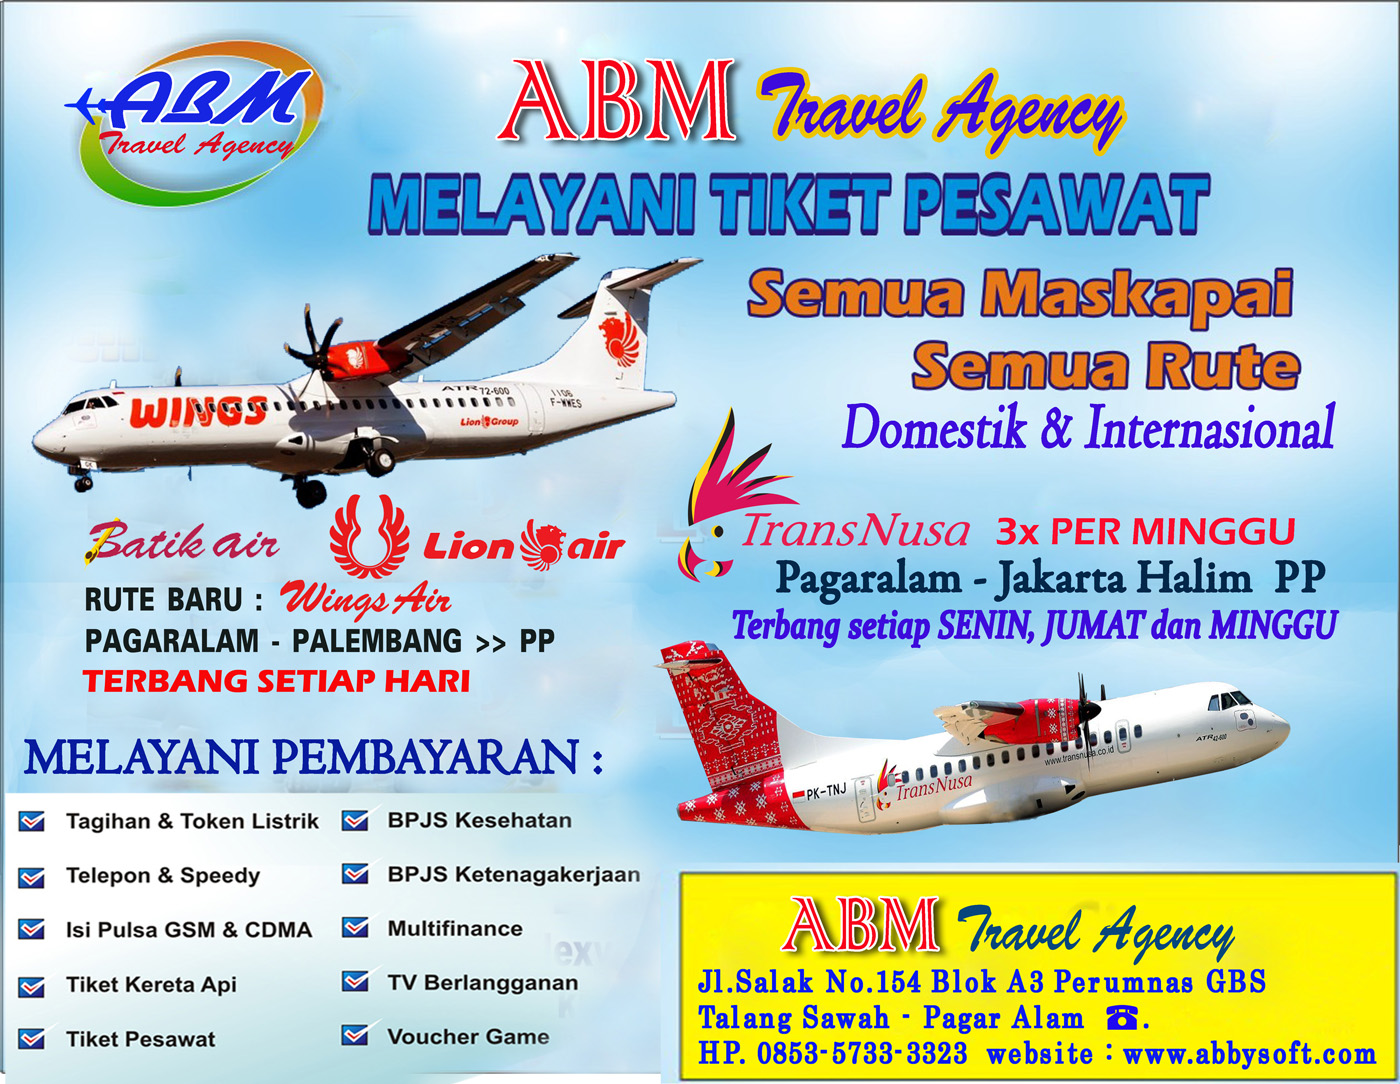 abm travel agent